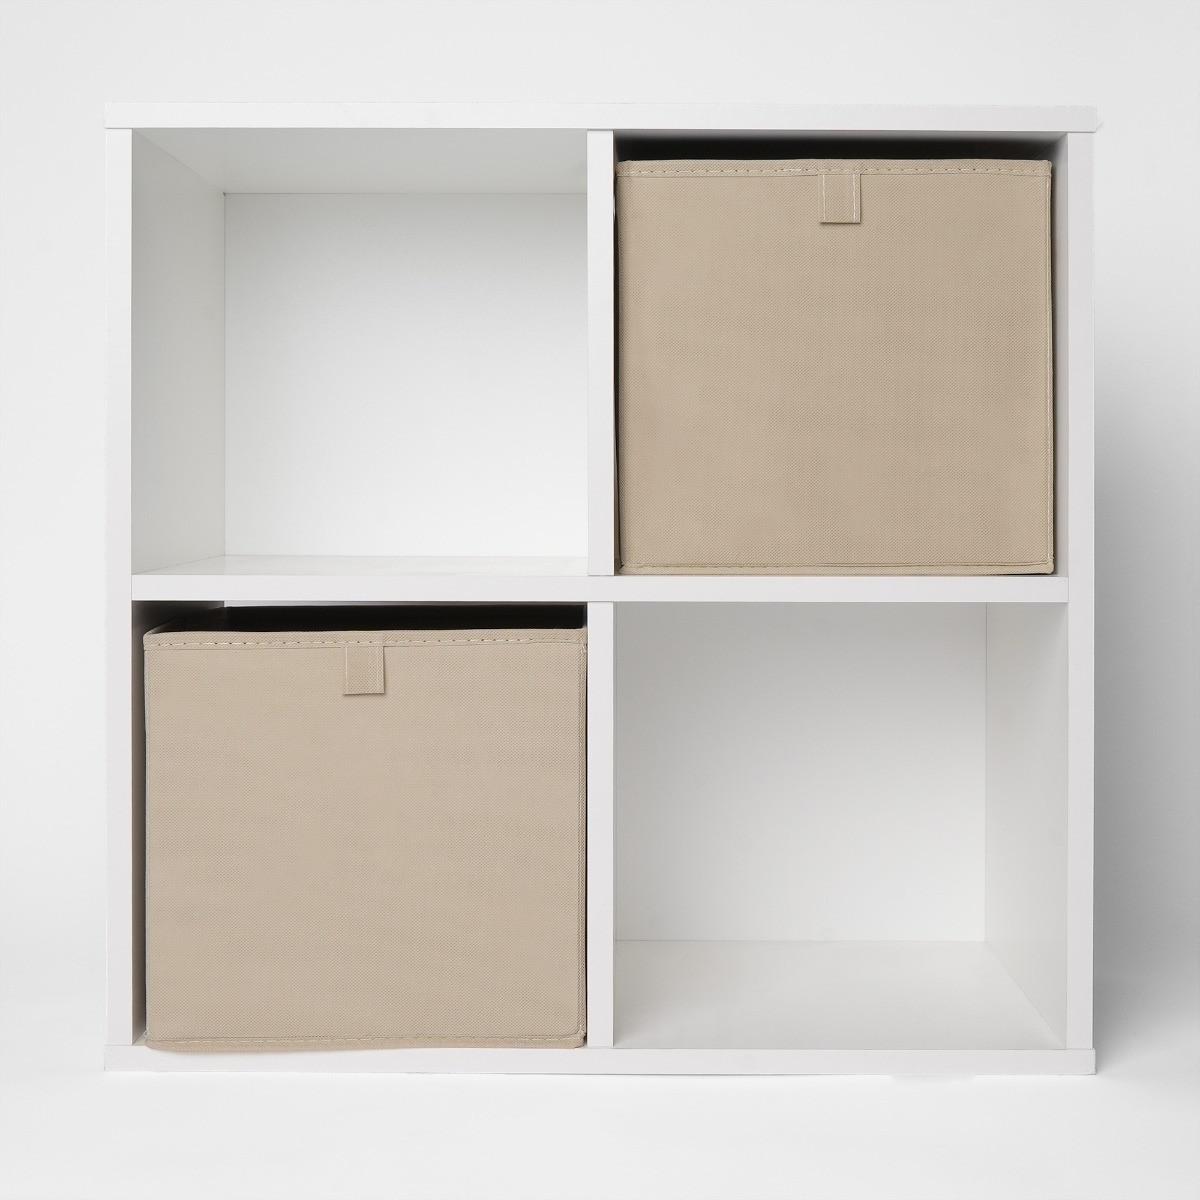 OHS Plain Cube Storage Boxes, Beige - 2 Pack>